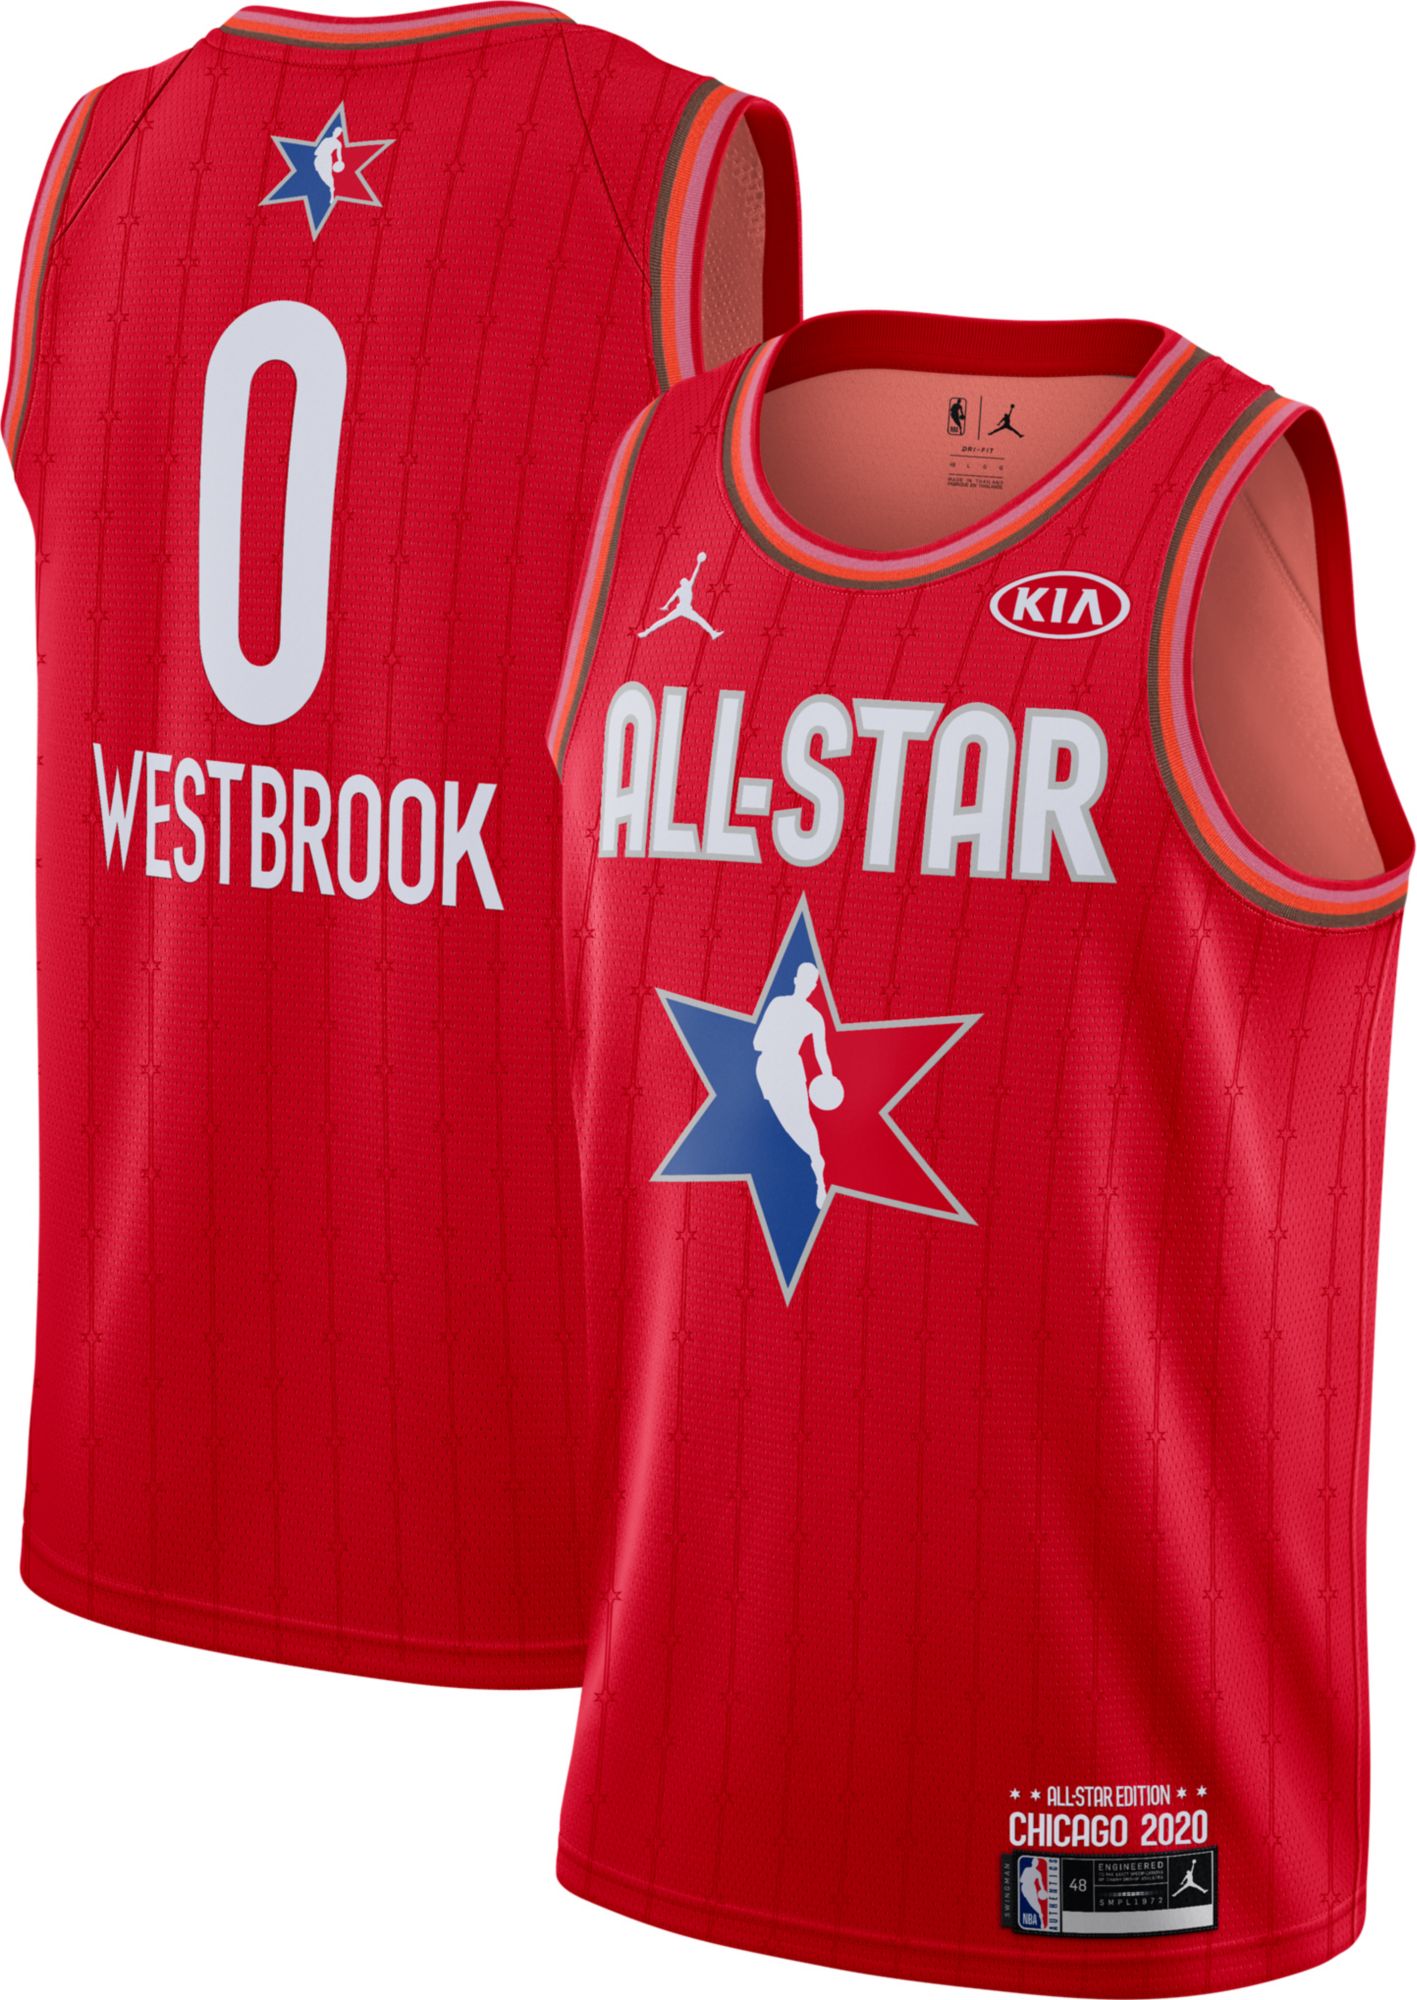 westbrook all star jersey